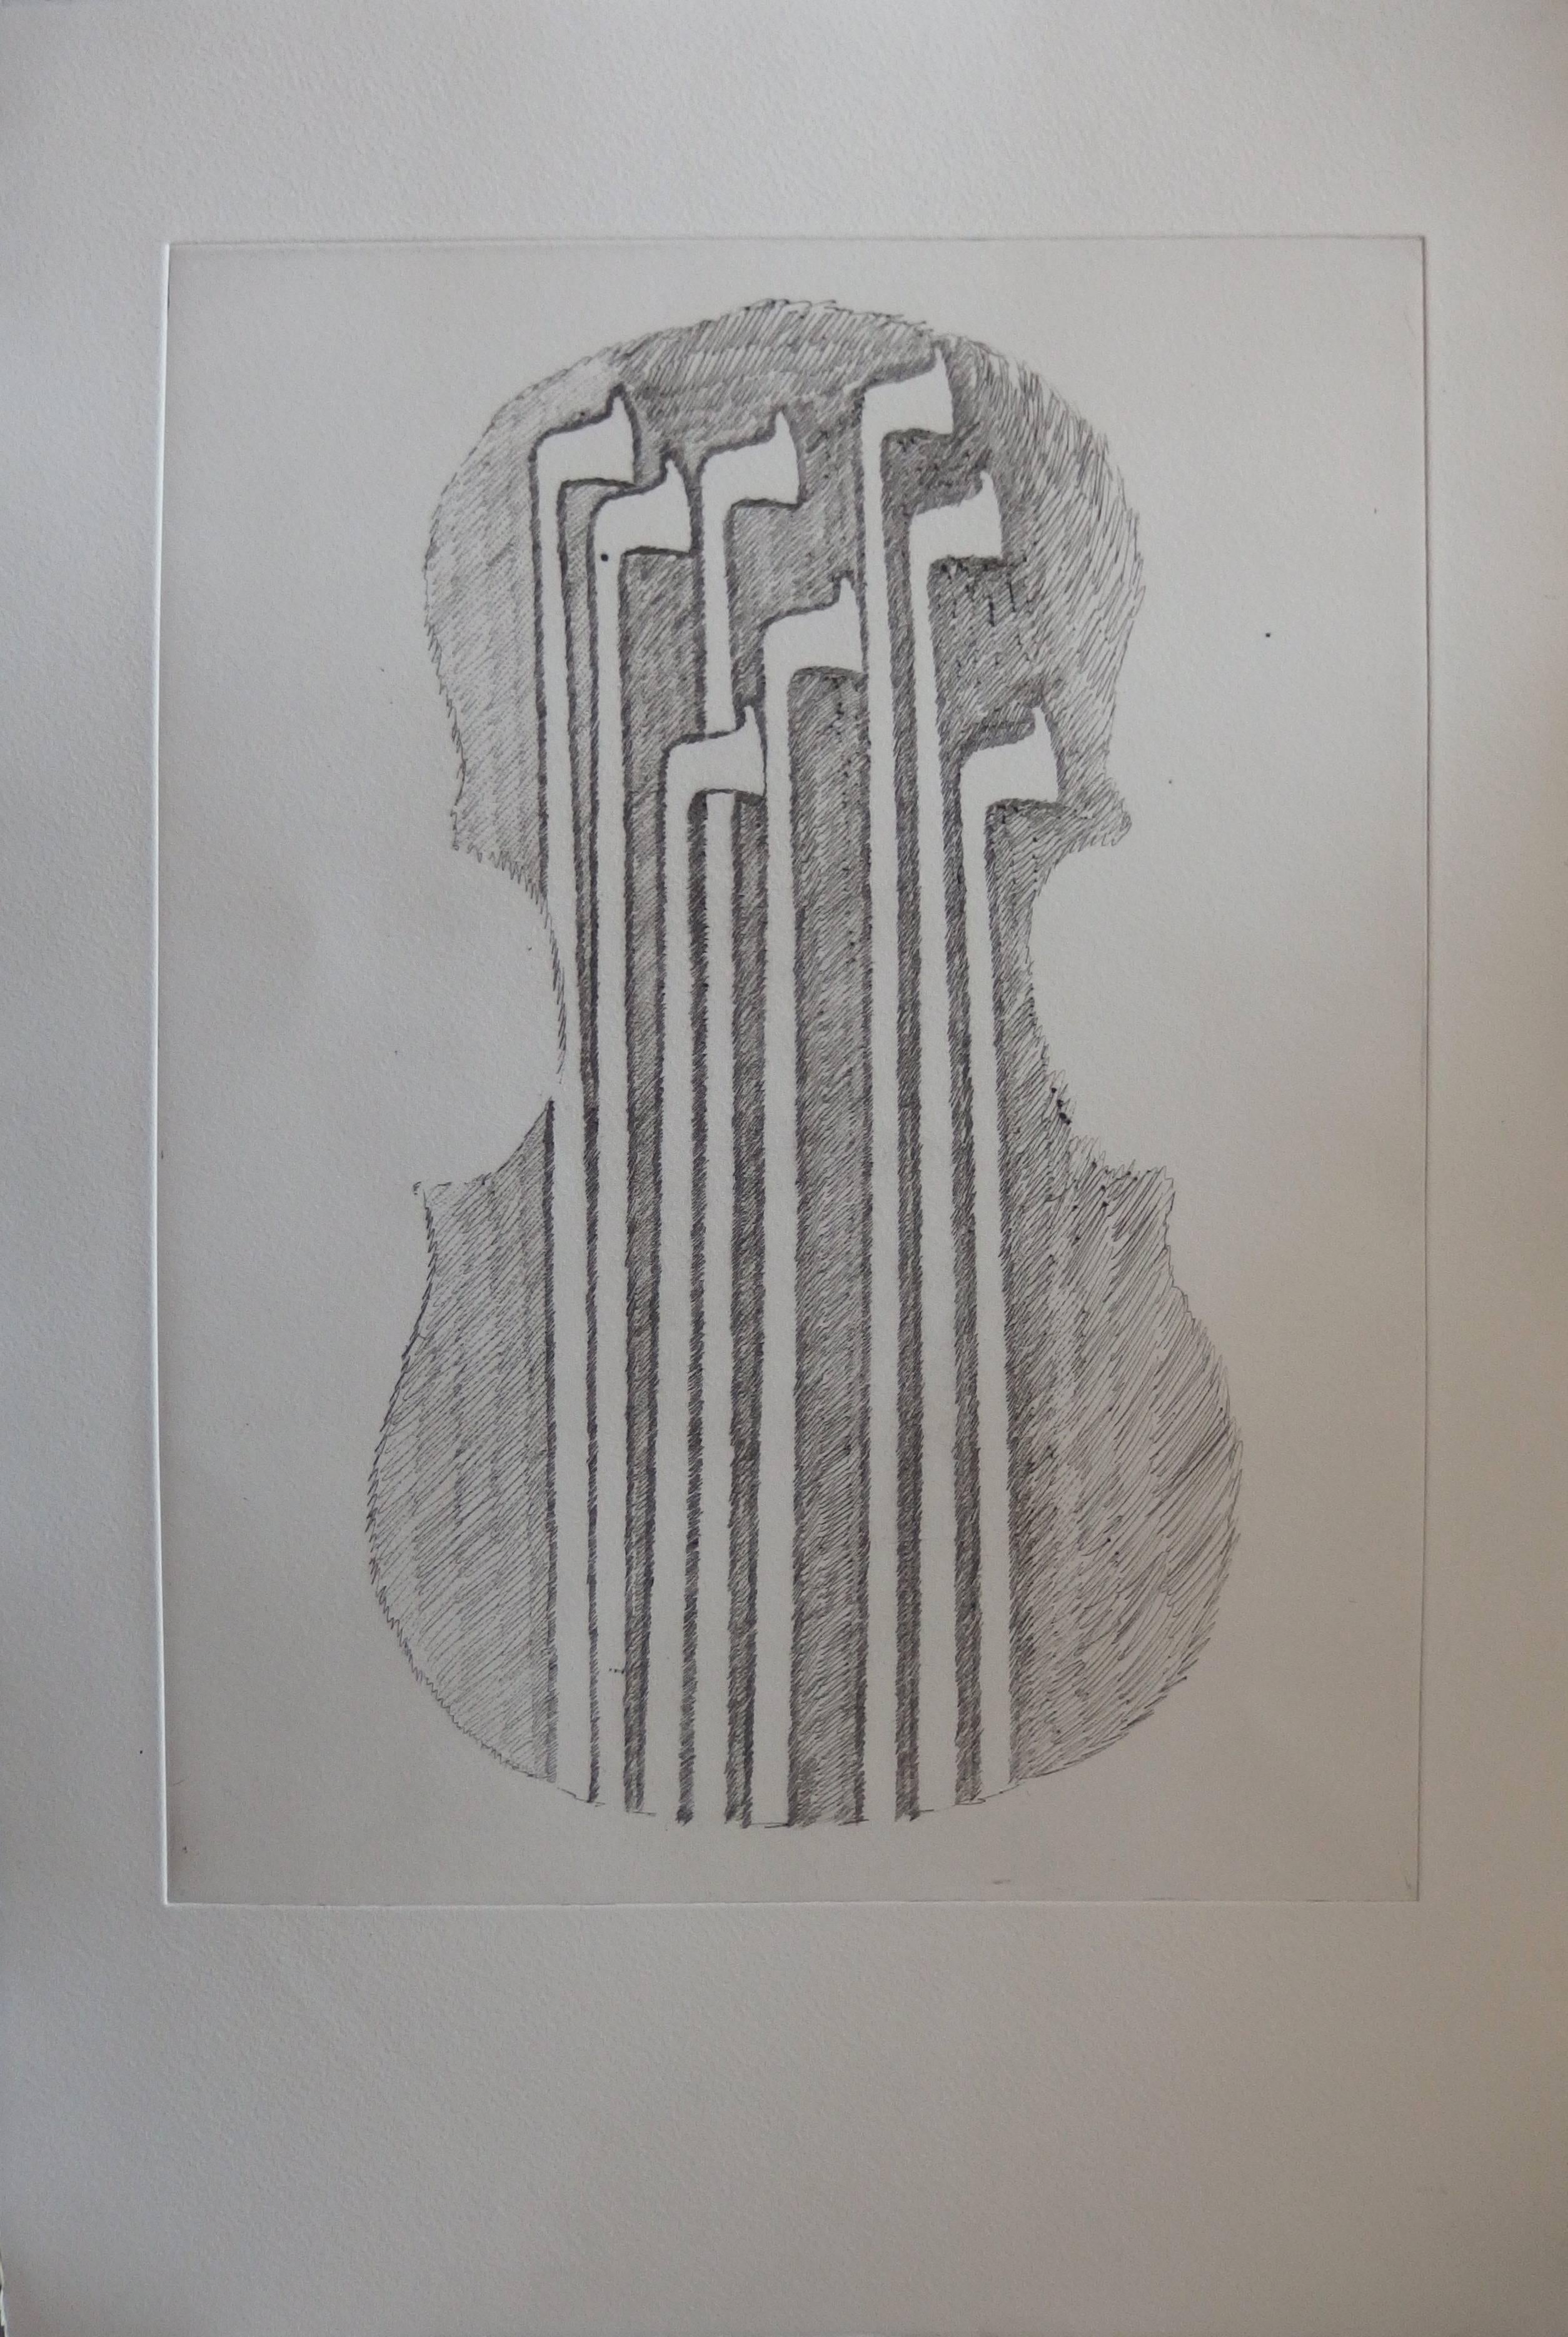 Fernandez Arman Figurative Print - Violin and bows - Original etching - 1979